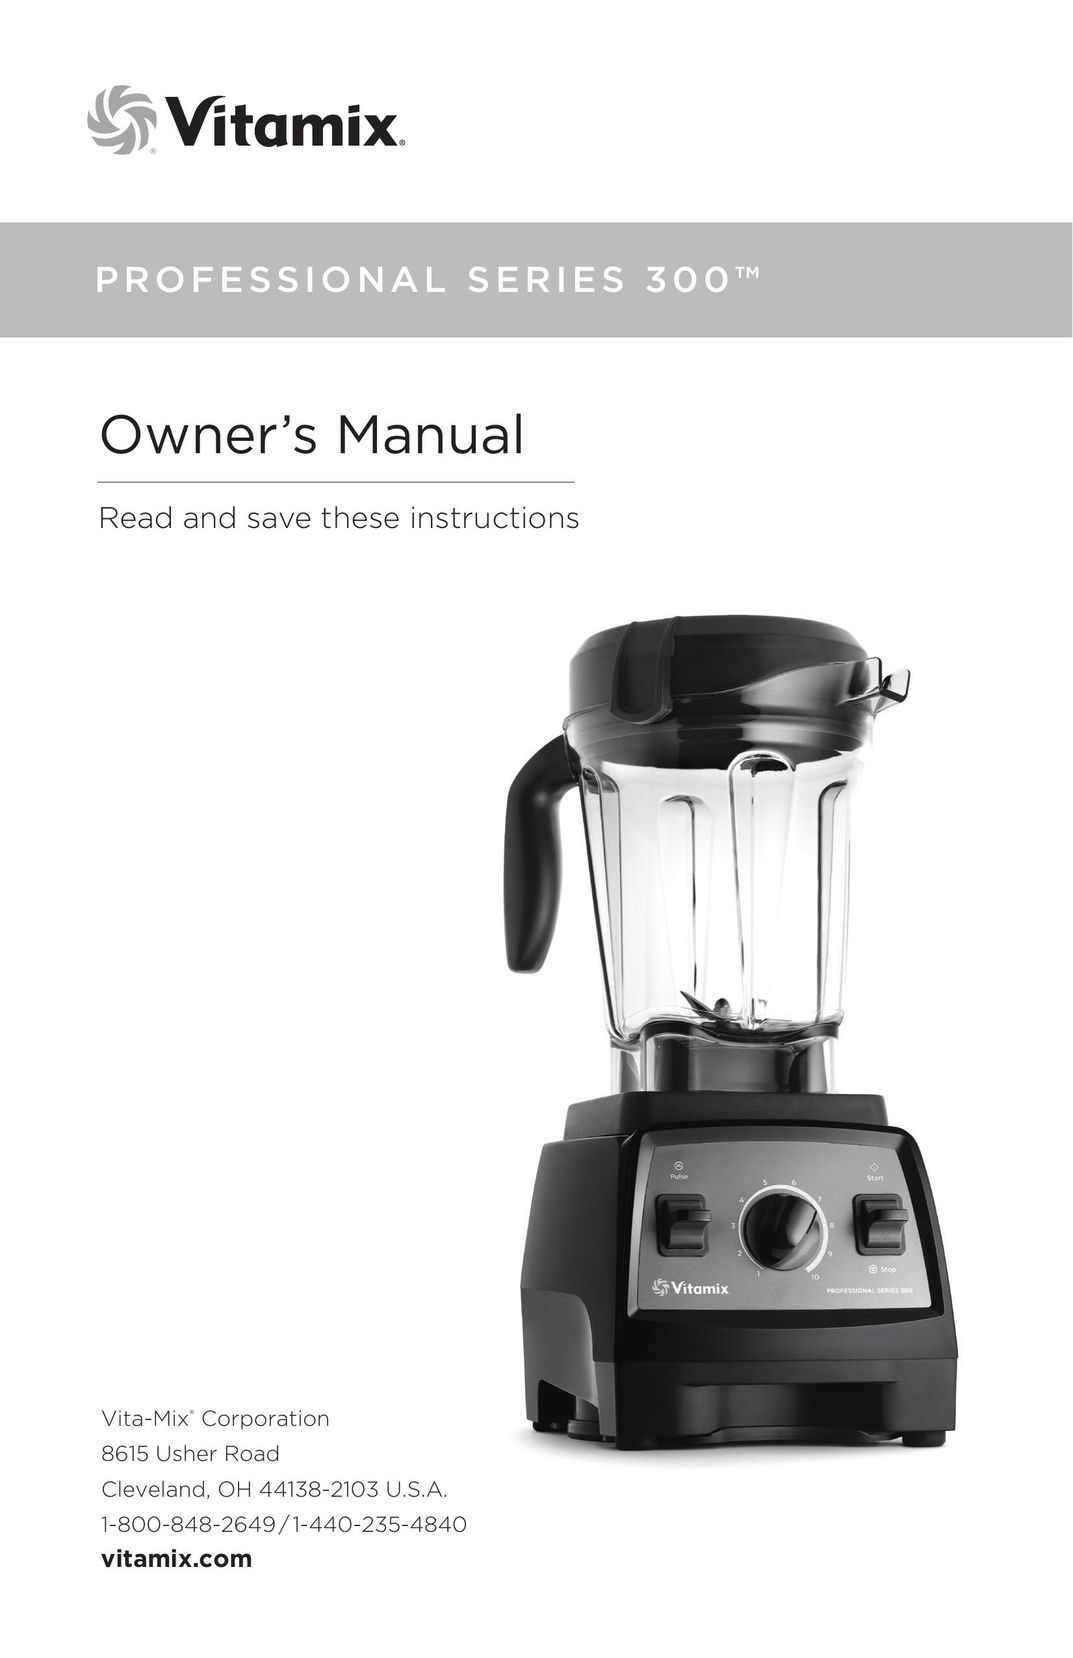 Vita-Mix PROFESSIONAL SERIES 300 Blender User Manual